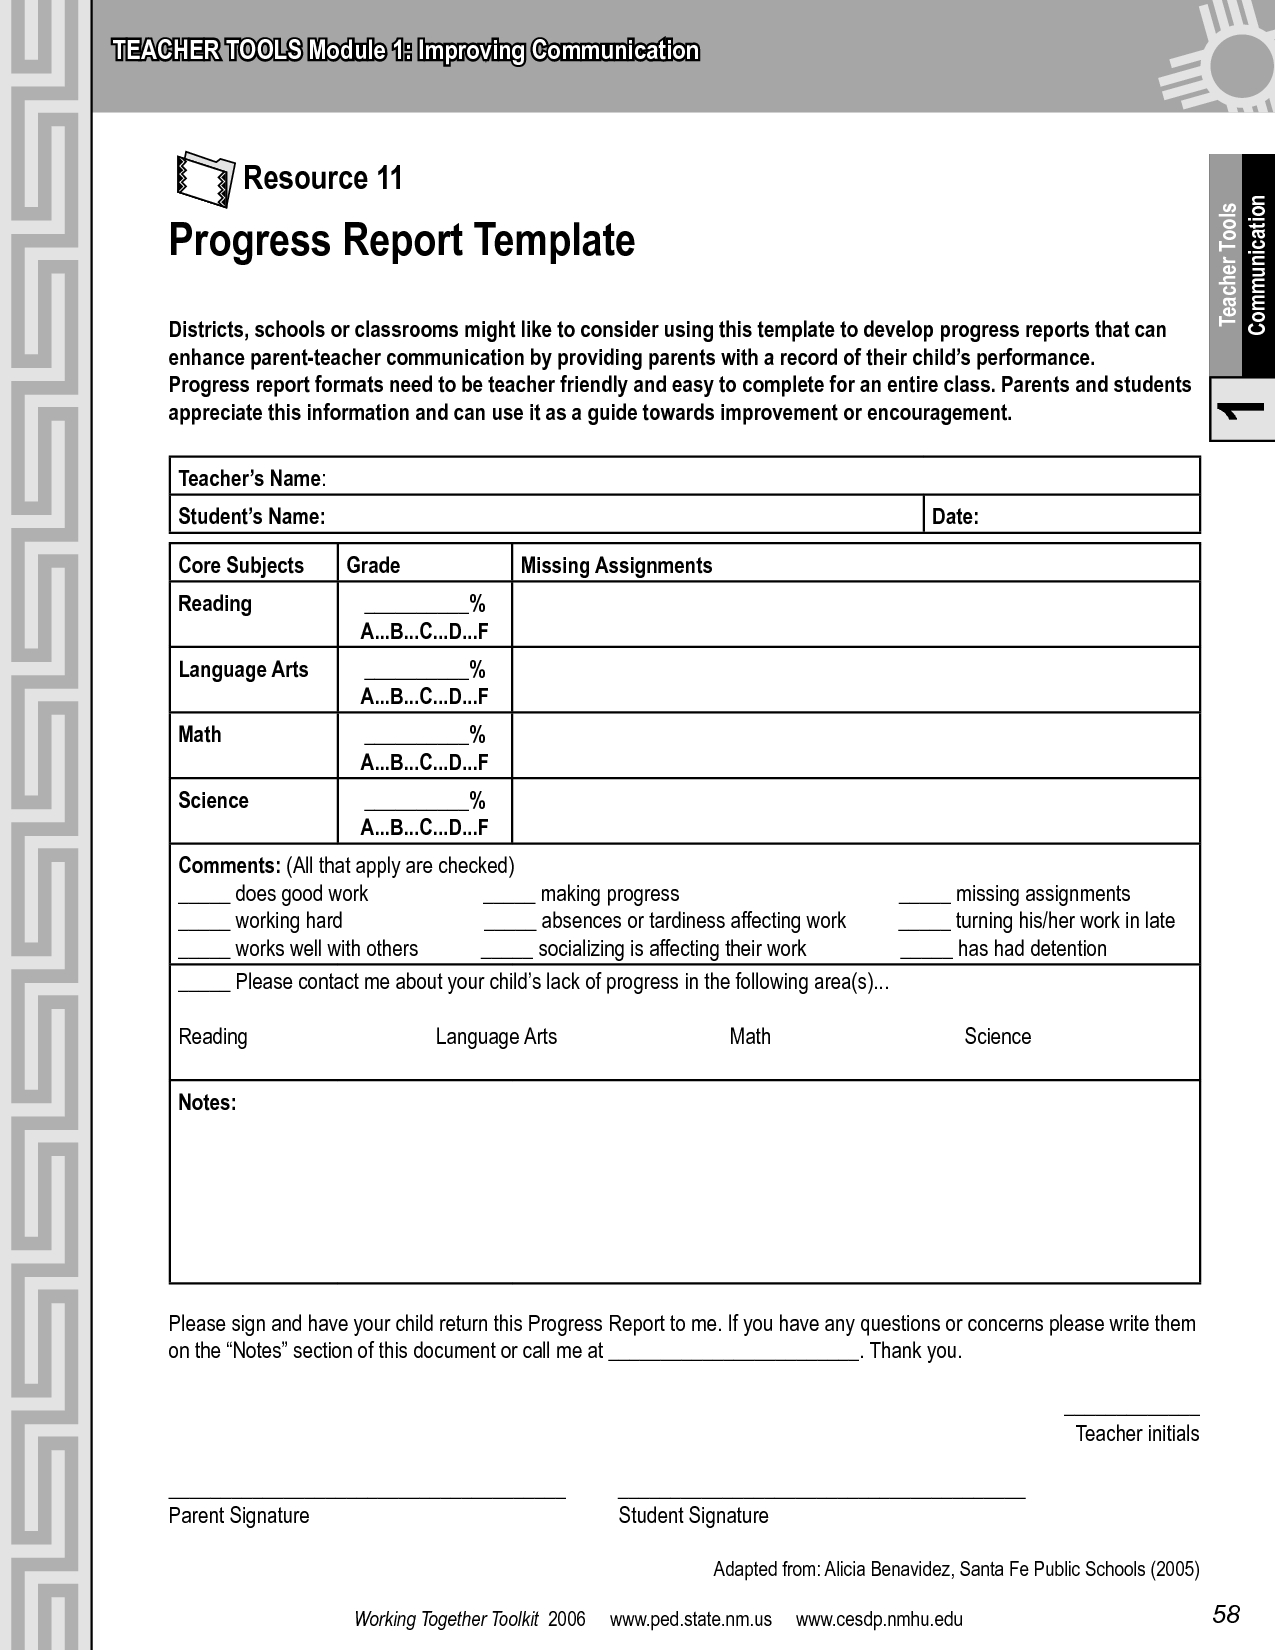 Premium Progress Report Template For Teacherccx13760 Throughout High School Progress Report Template